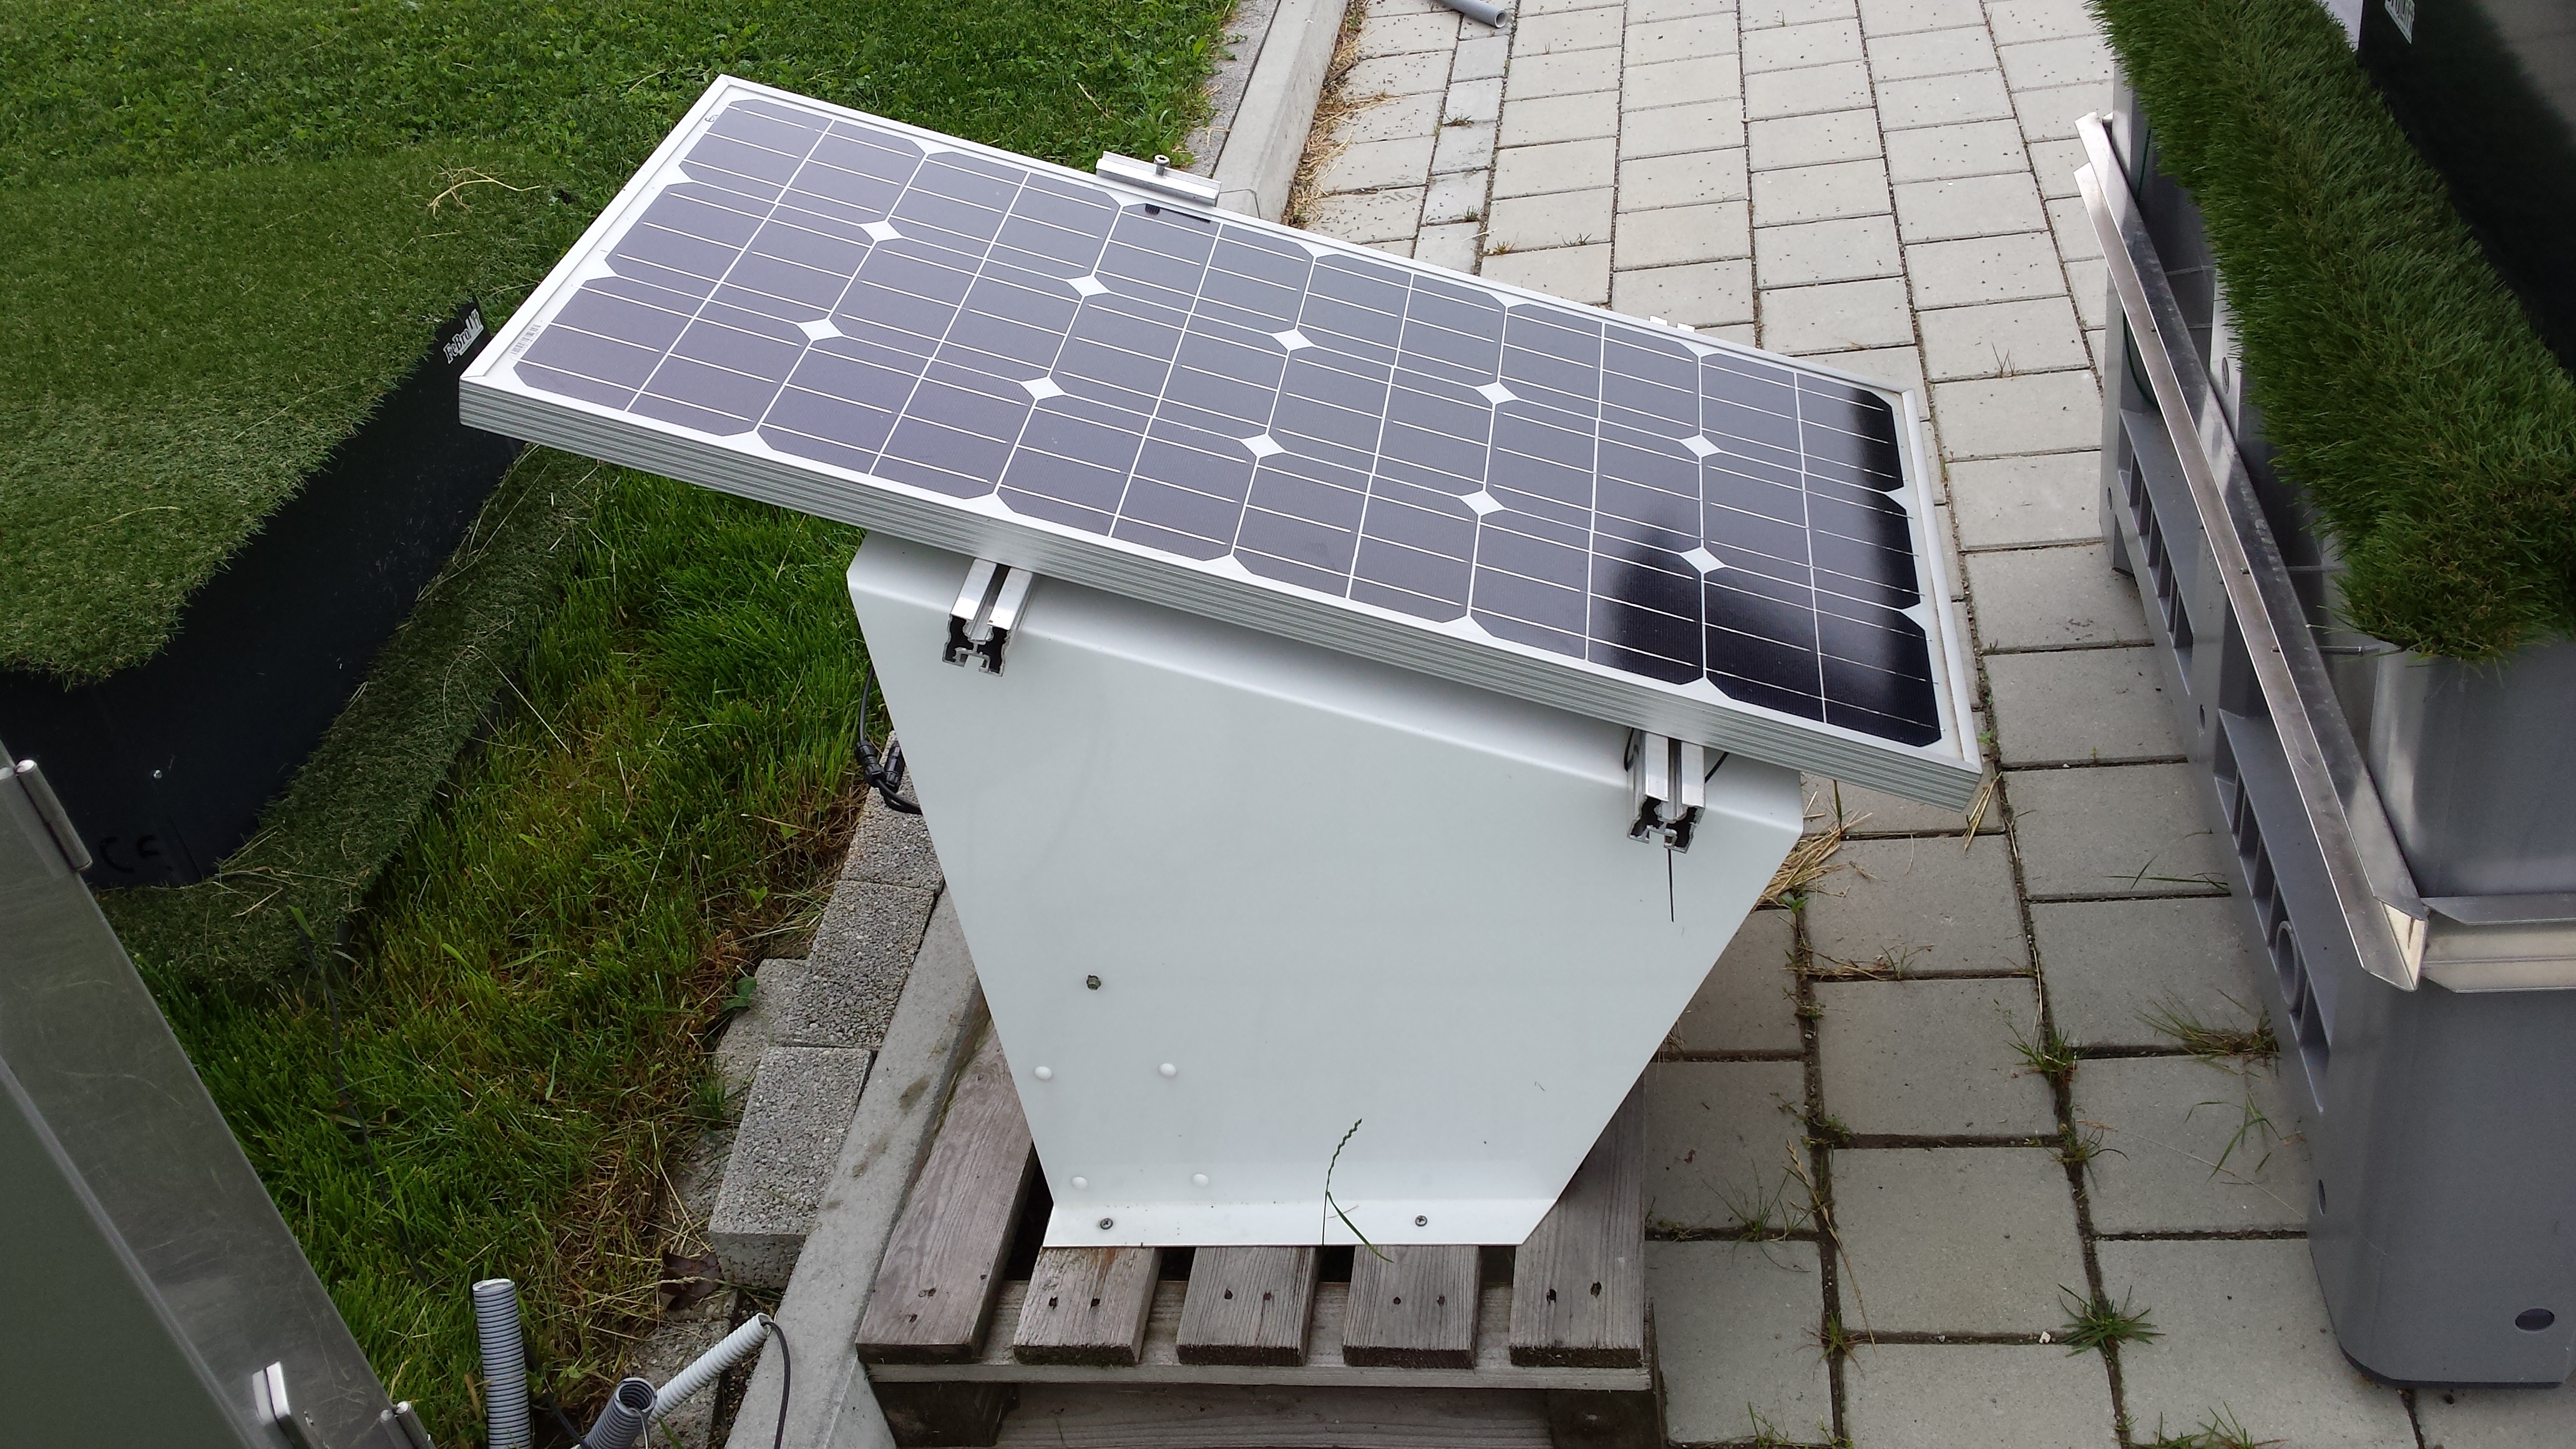 Photovoltaik Solarmodul 90W 12V polykristallin für Wohnmobile Hütte Boot